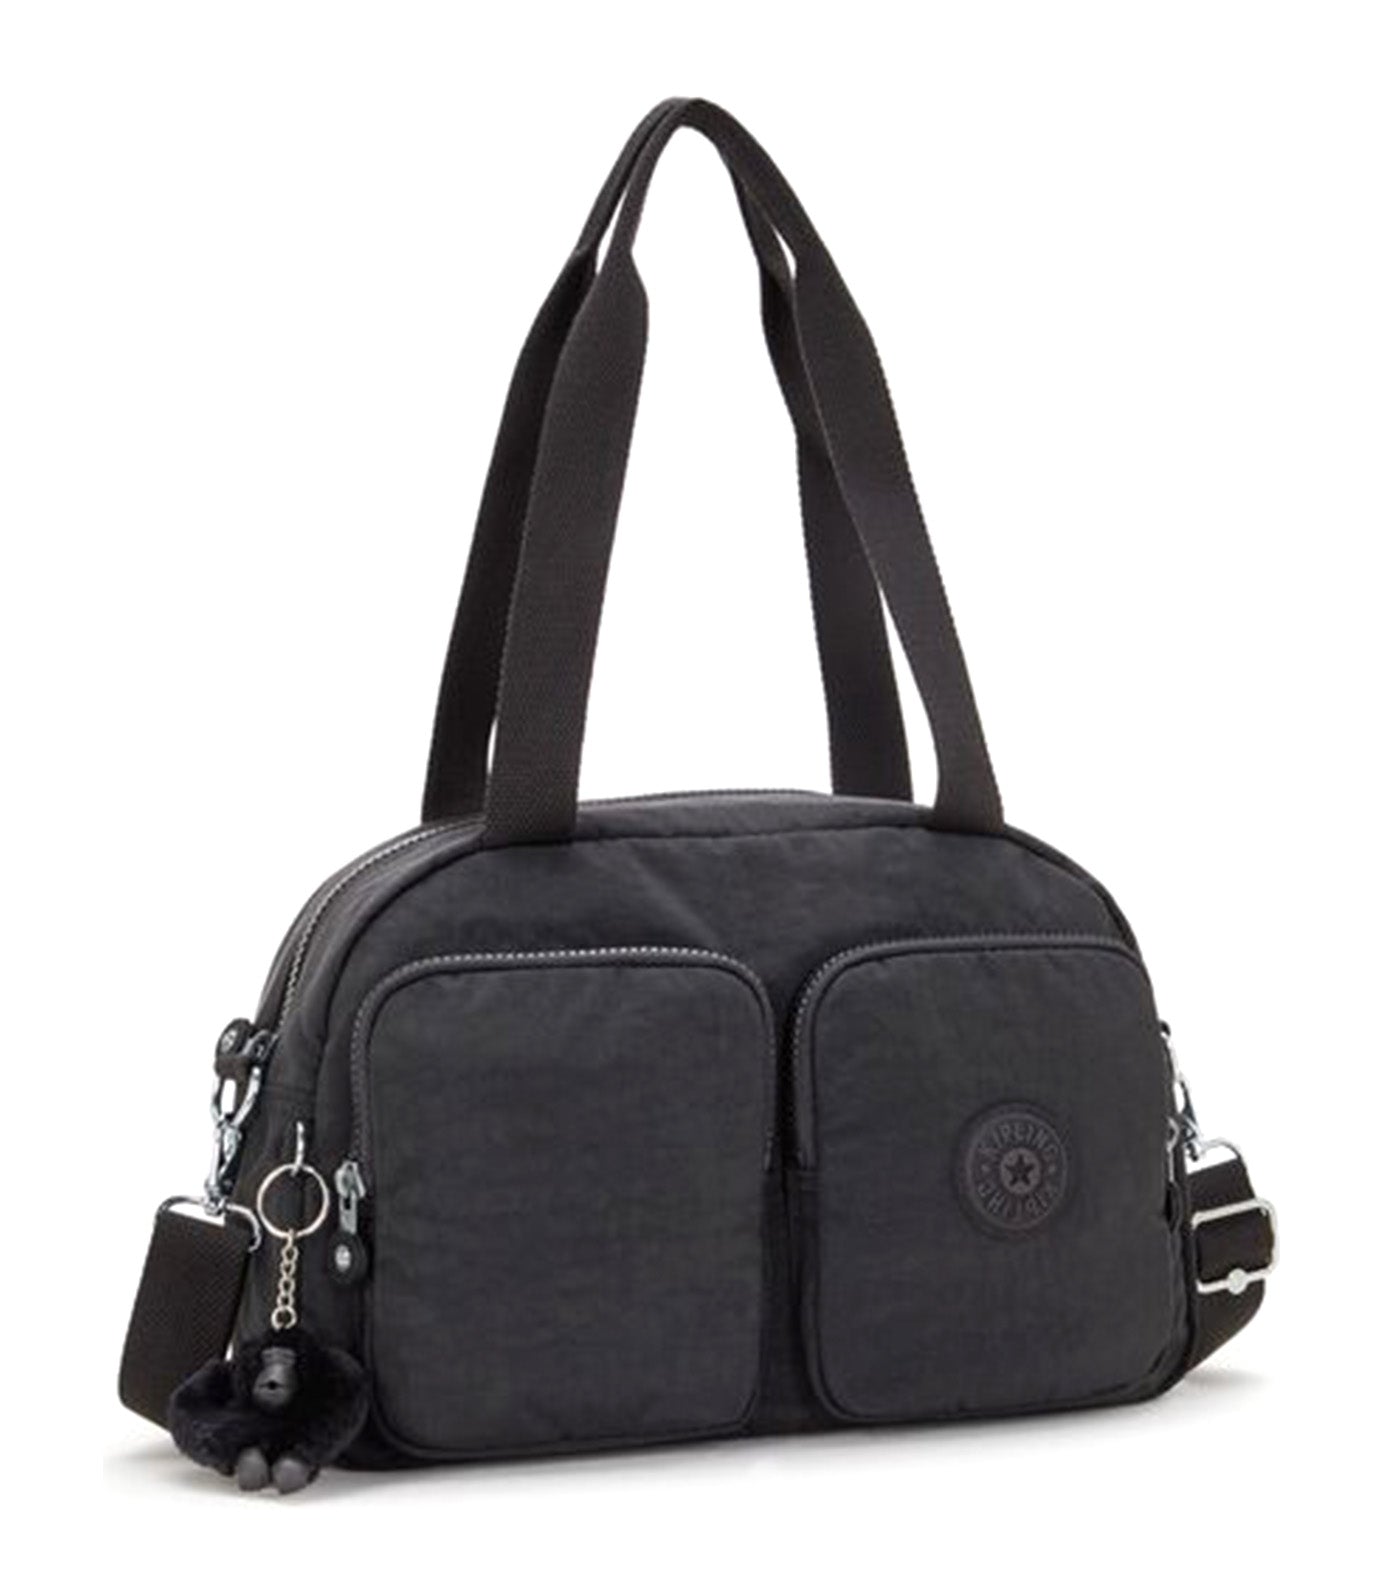 Cool Defea Handbag Black Noir